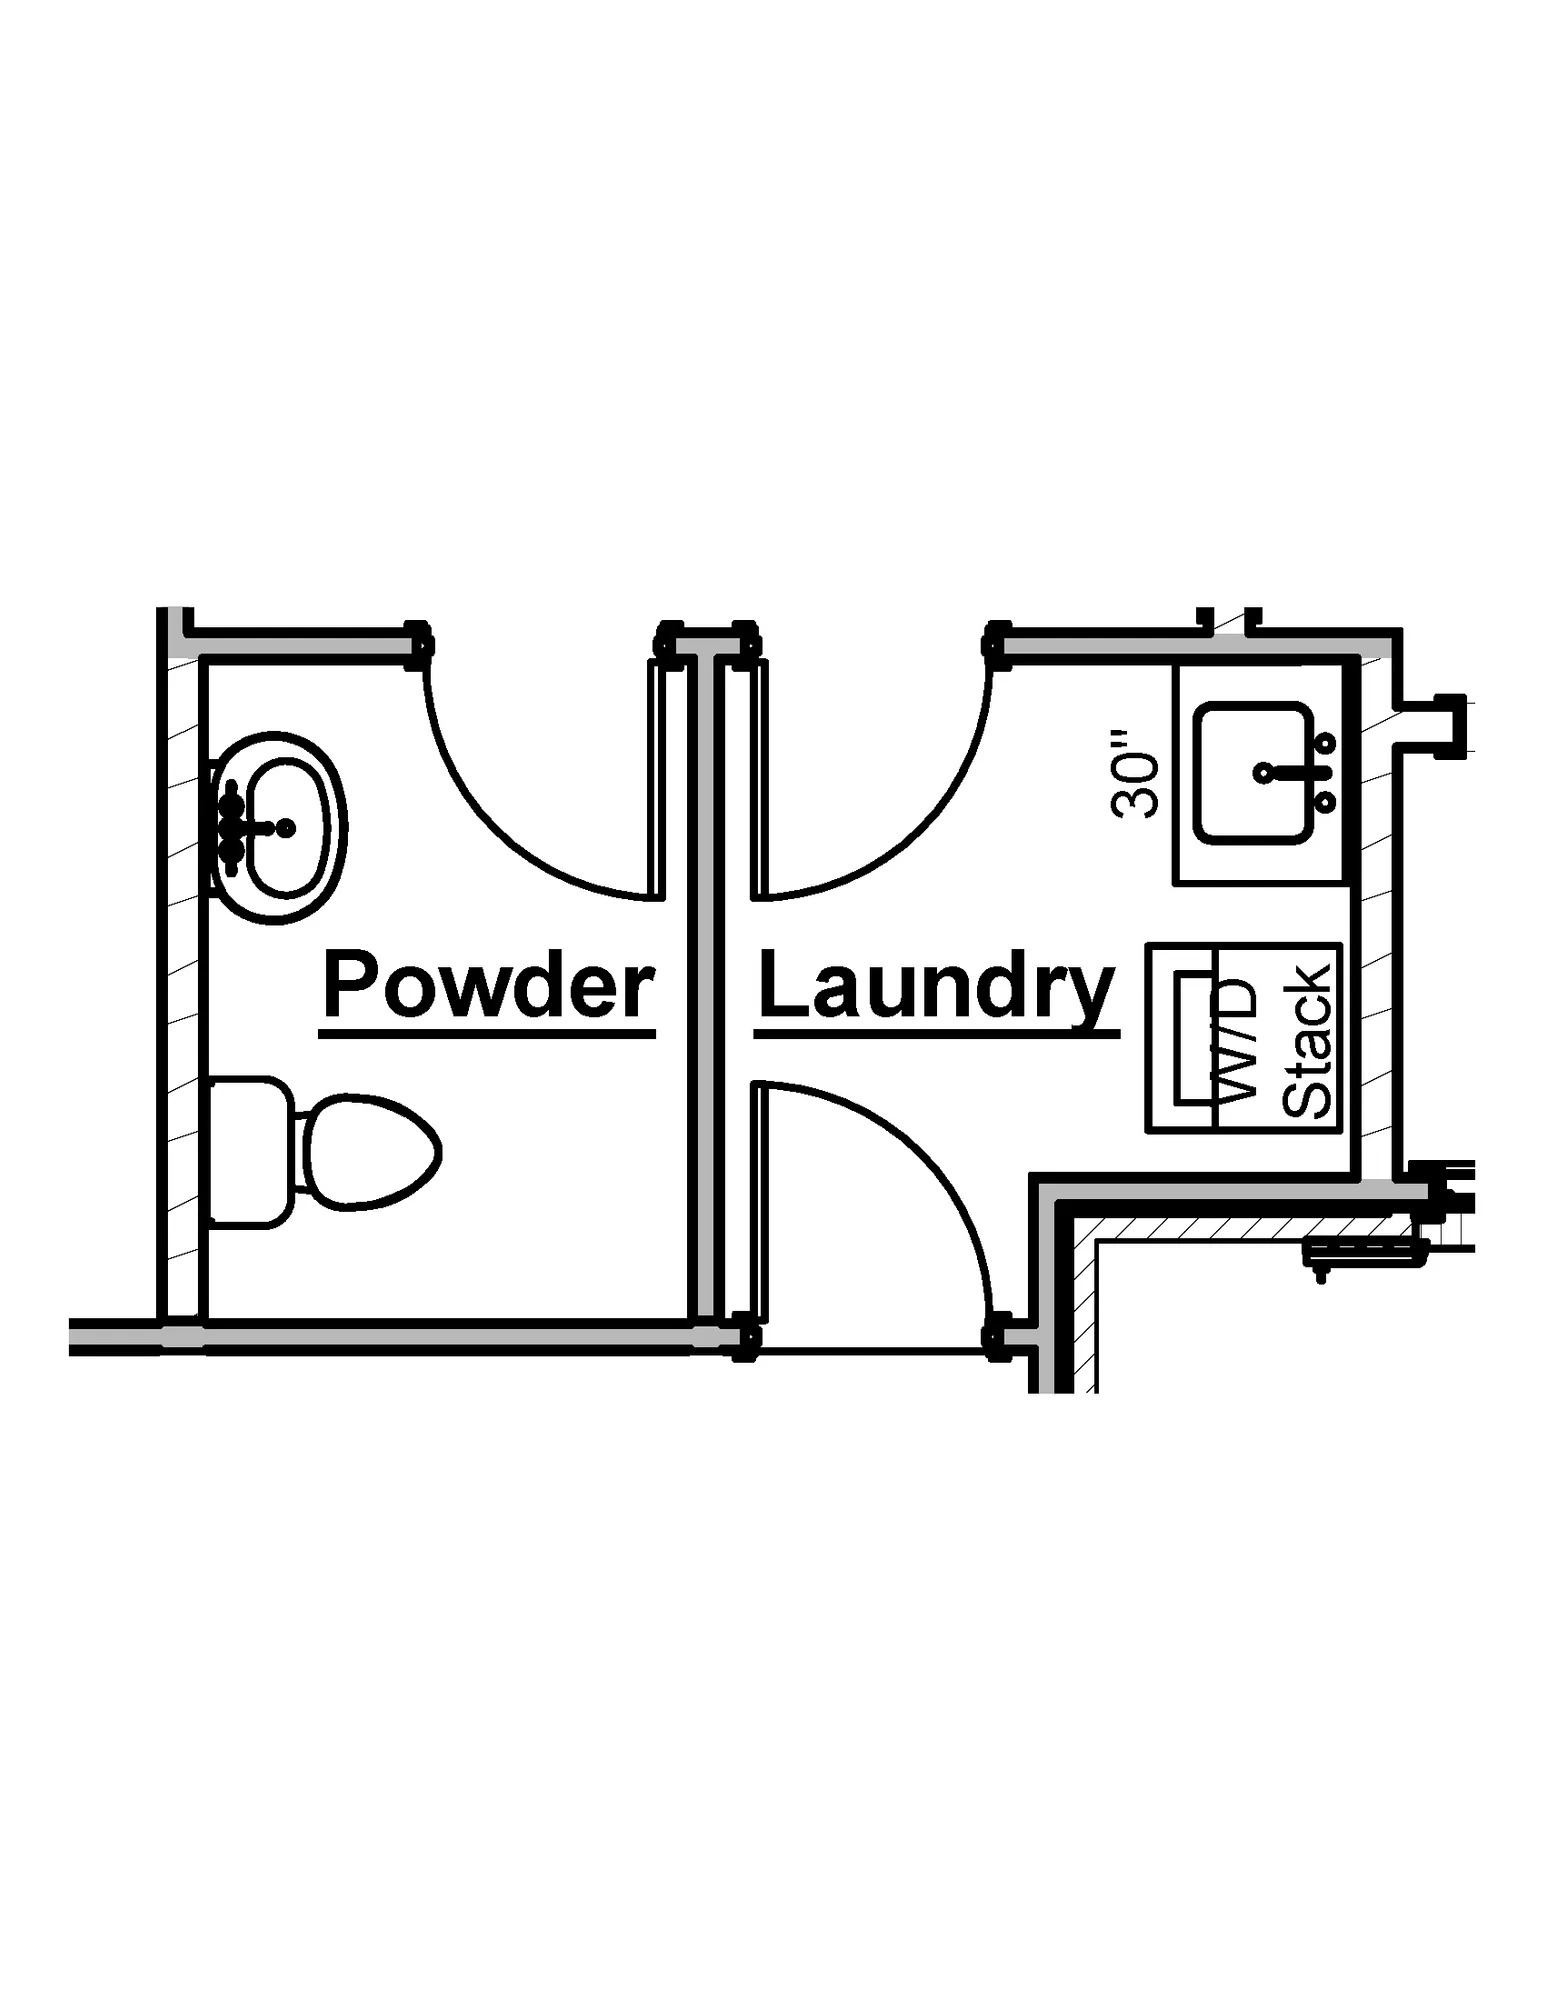 Powder Bath with Laundry Sink Option - undefined